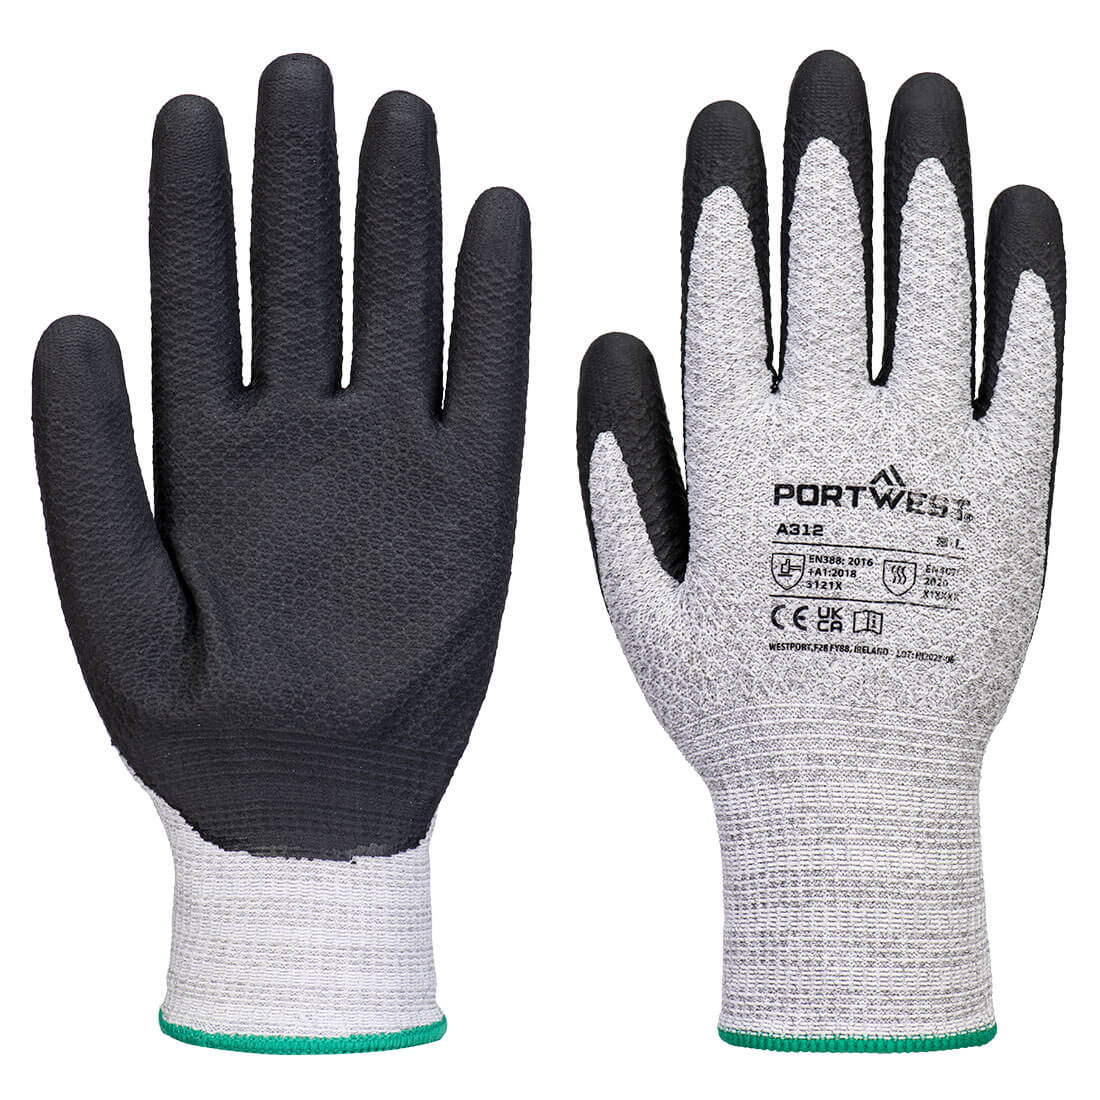 A312 Grip 13 Nitrile Diamond Knit Gloves